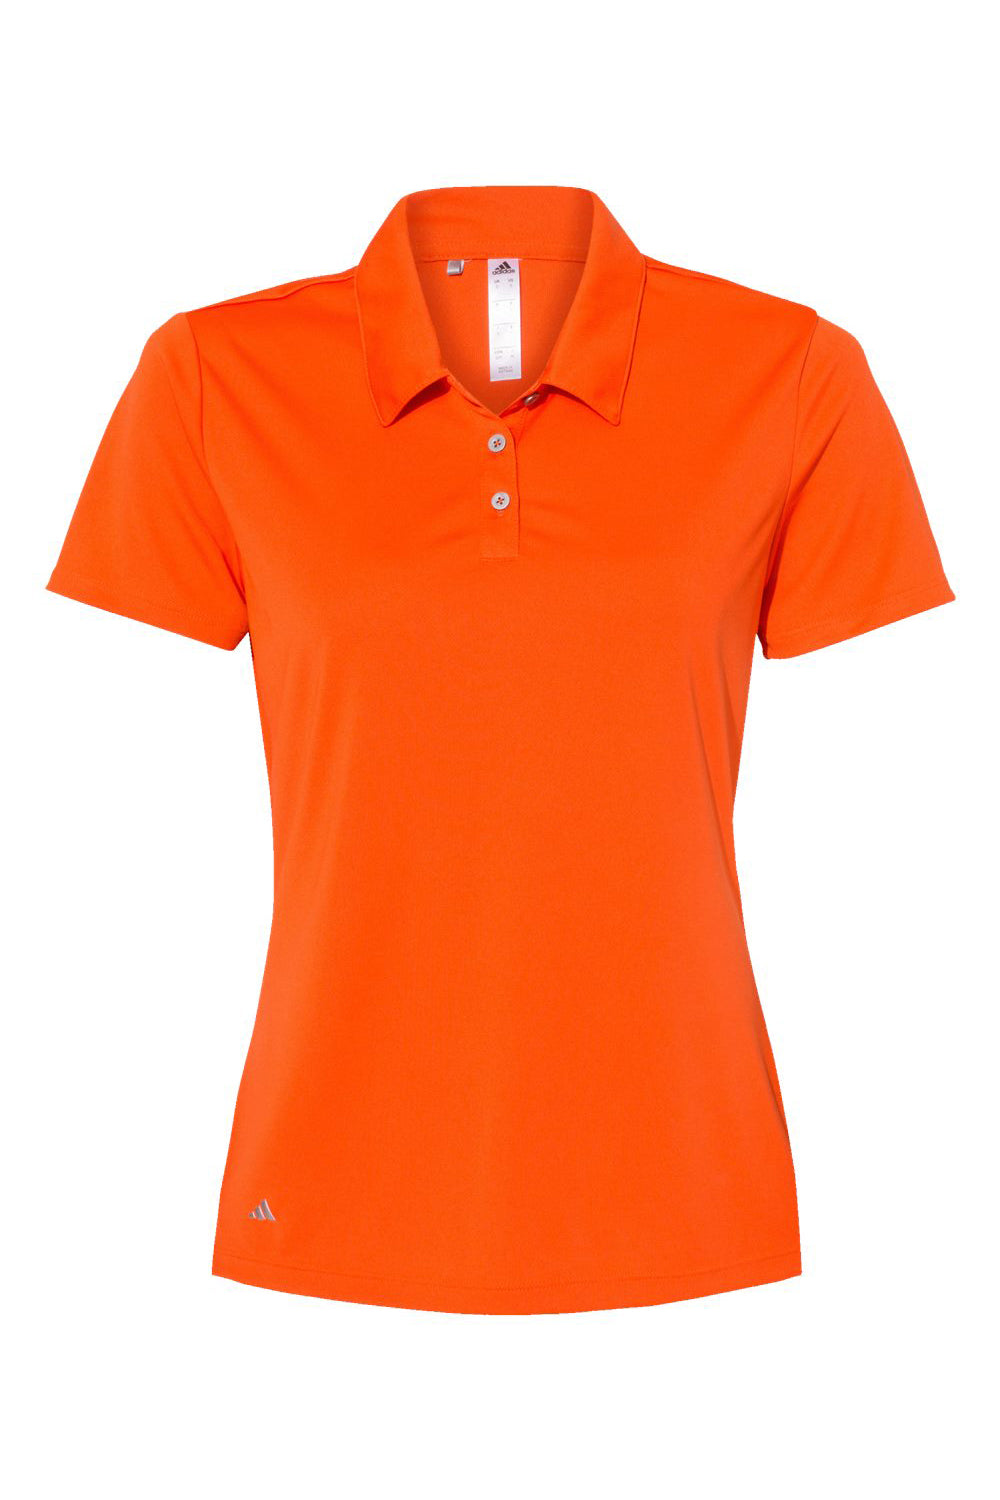 Adidas A231 Womens Performance Short Sleeve Polo Shirt Orange Flat Front